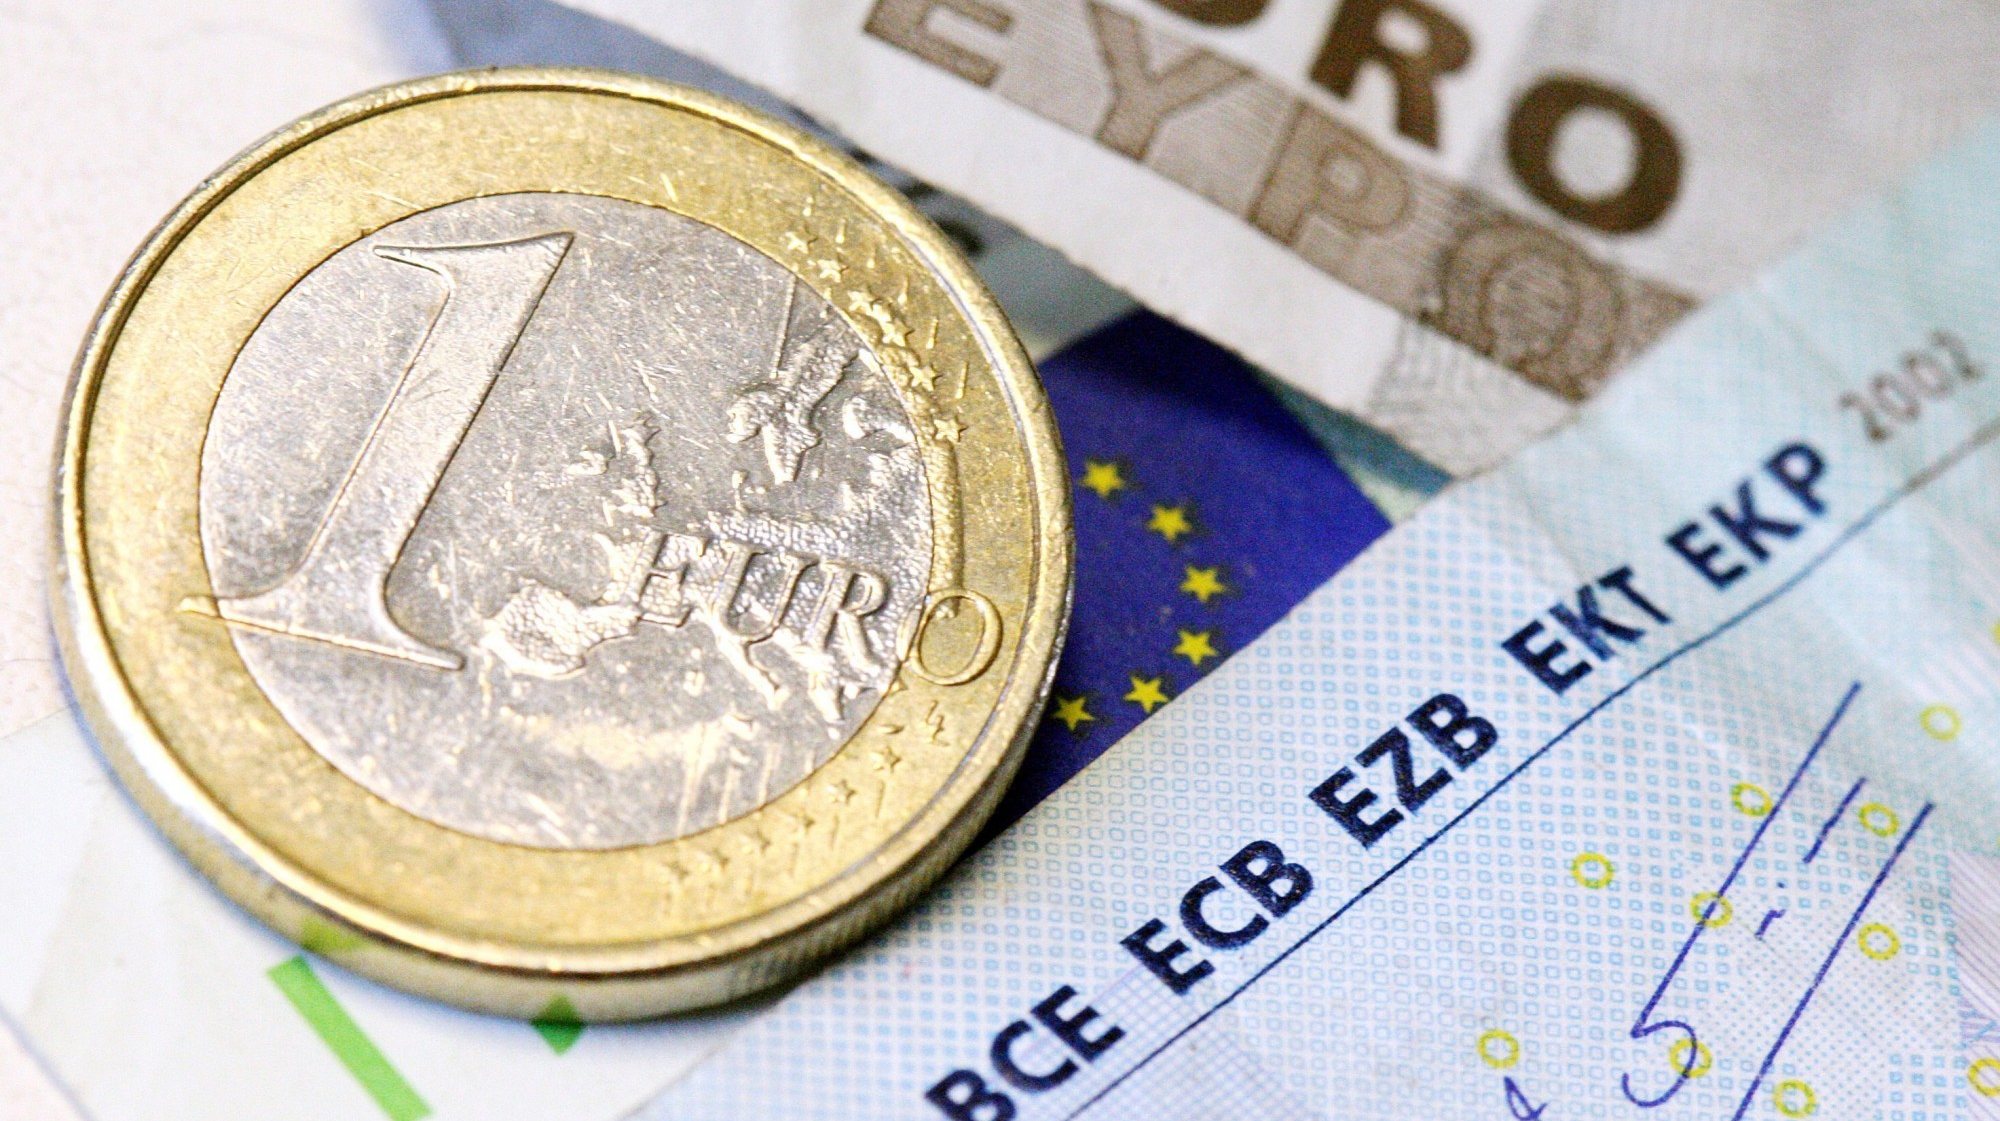 Notas e moeda de Euros